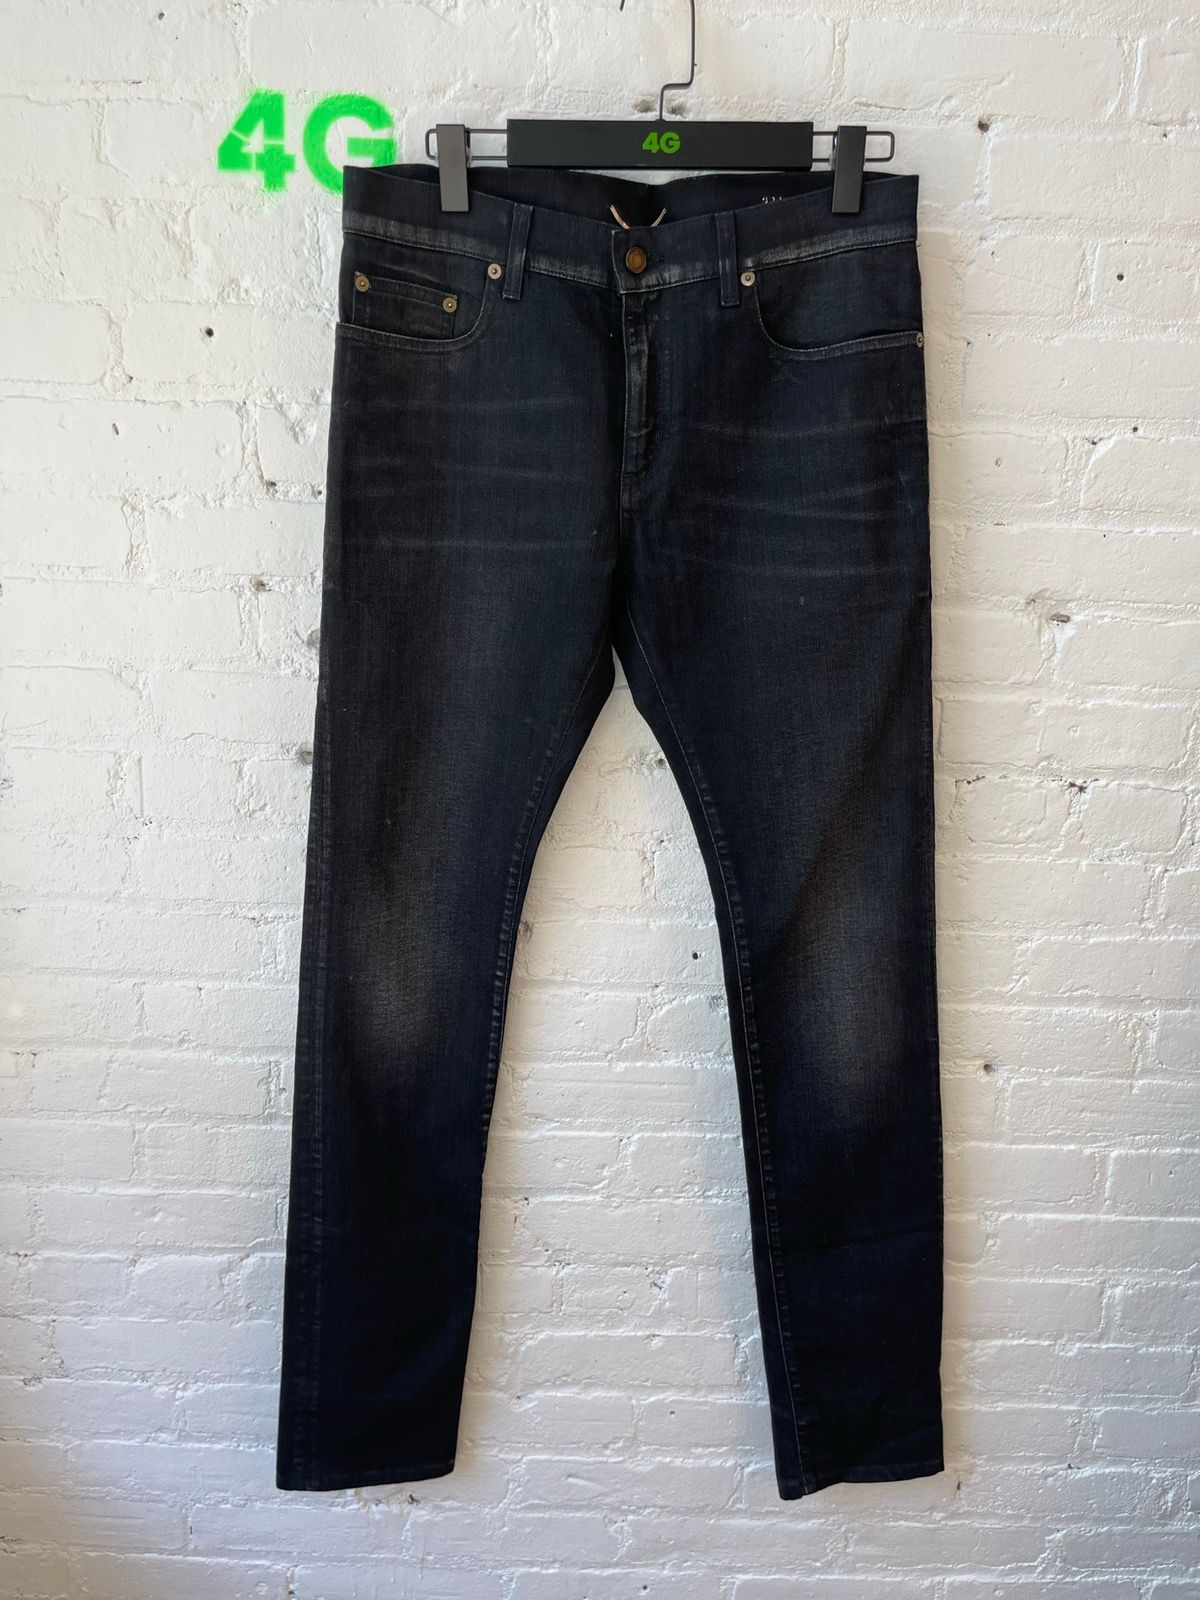 SLP SS16 Black D02 Black Wash Jeans sz30 UNALTERED!